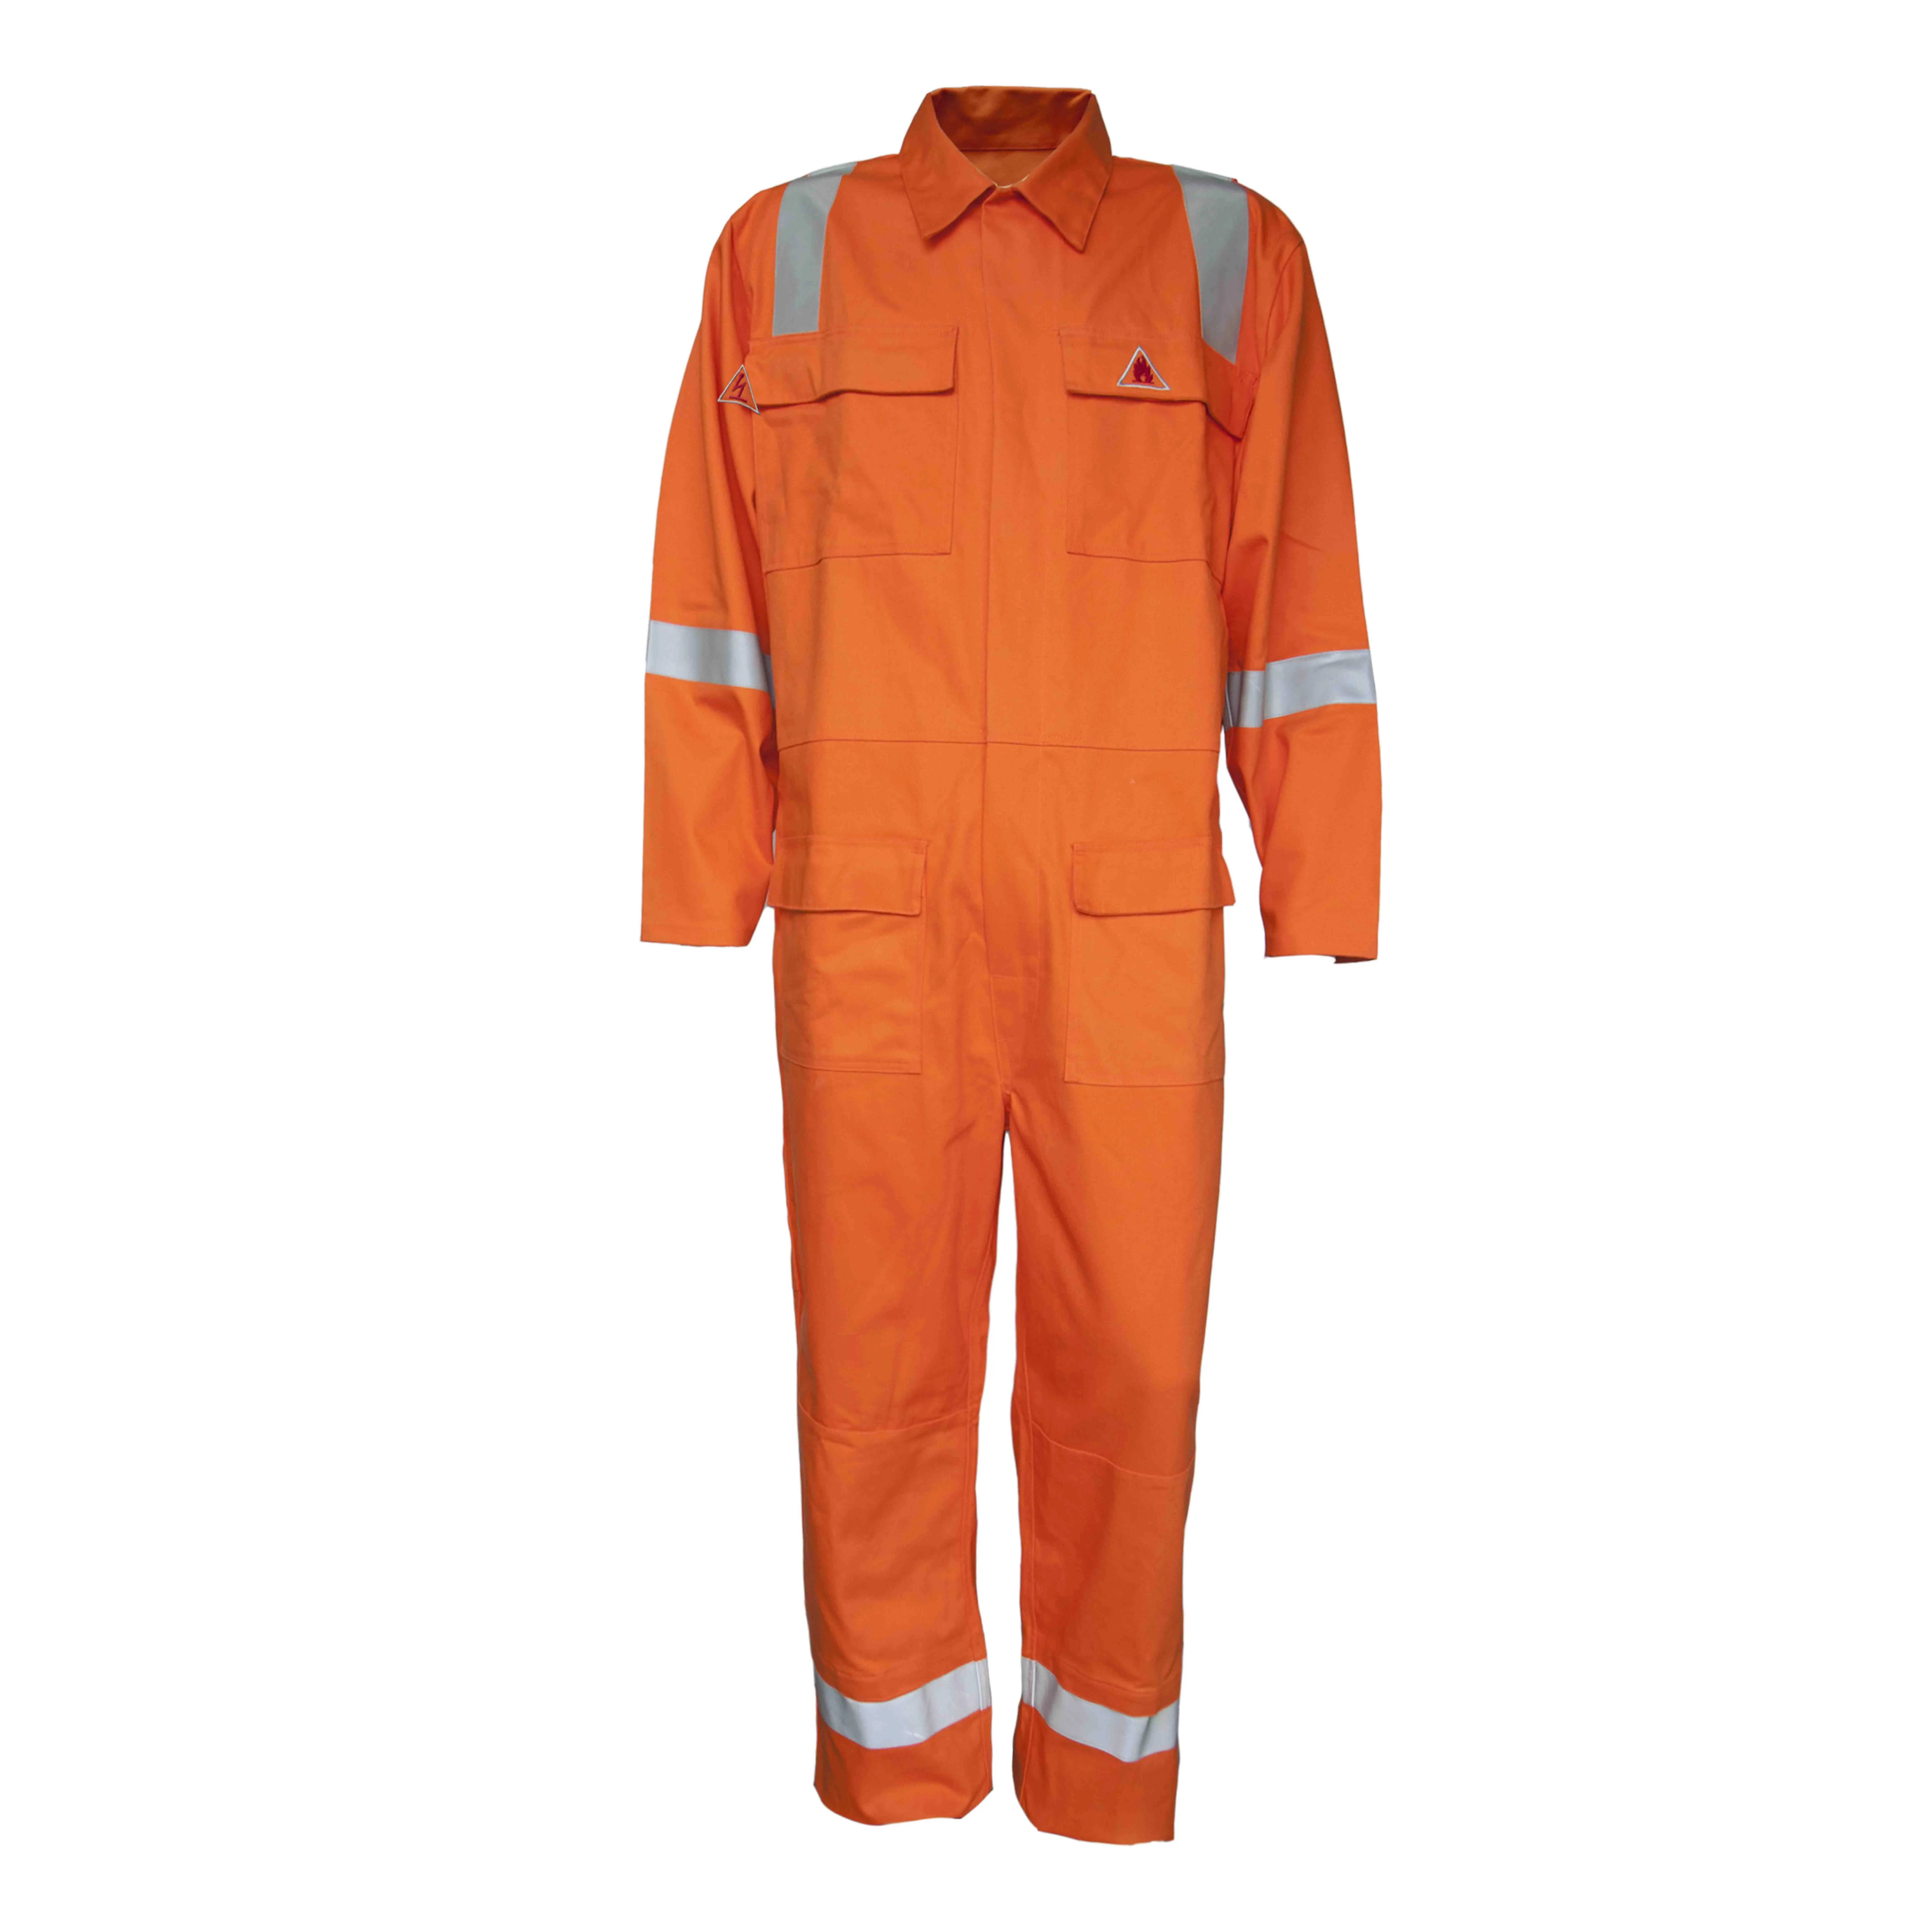 Orange Flame retardant safety uniform for construction workers